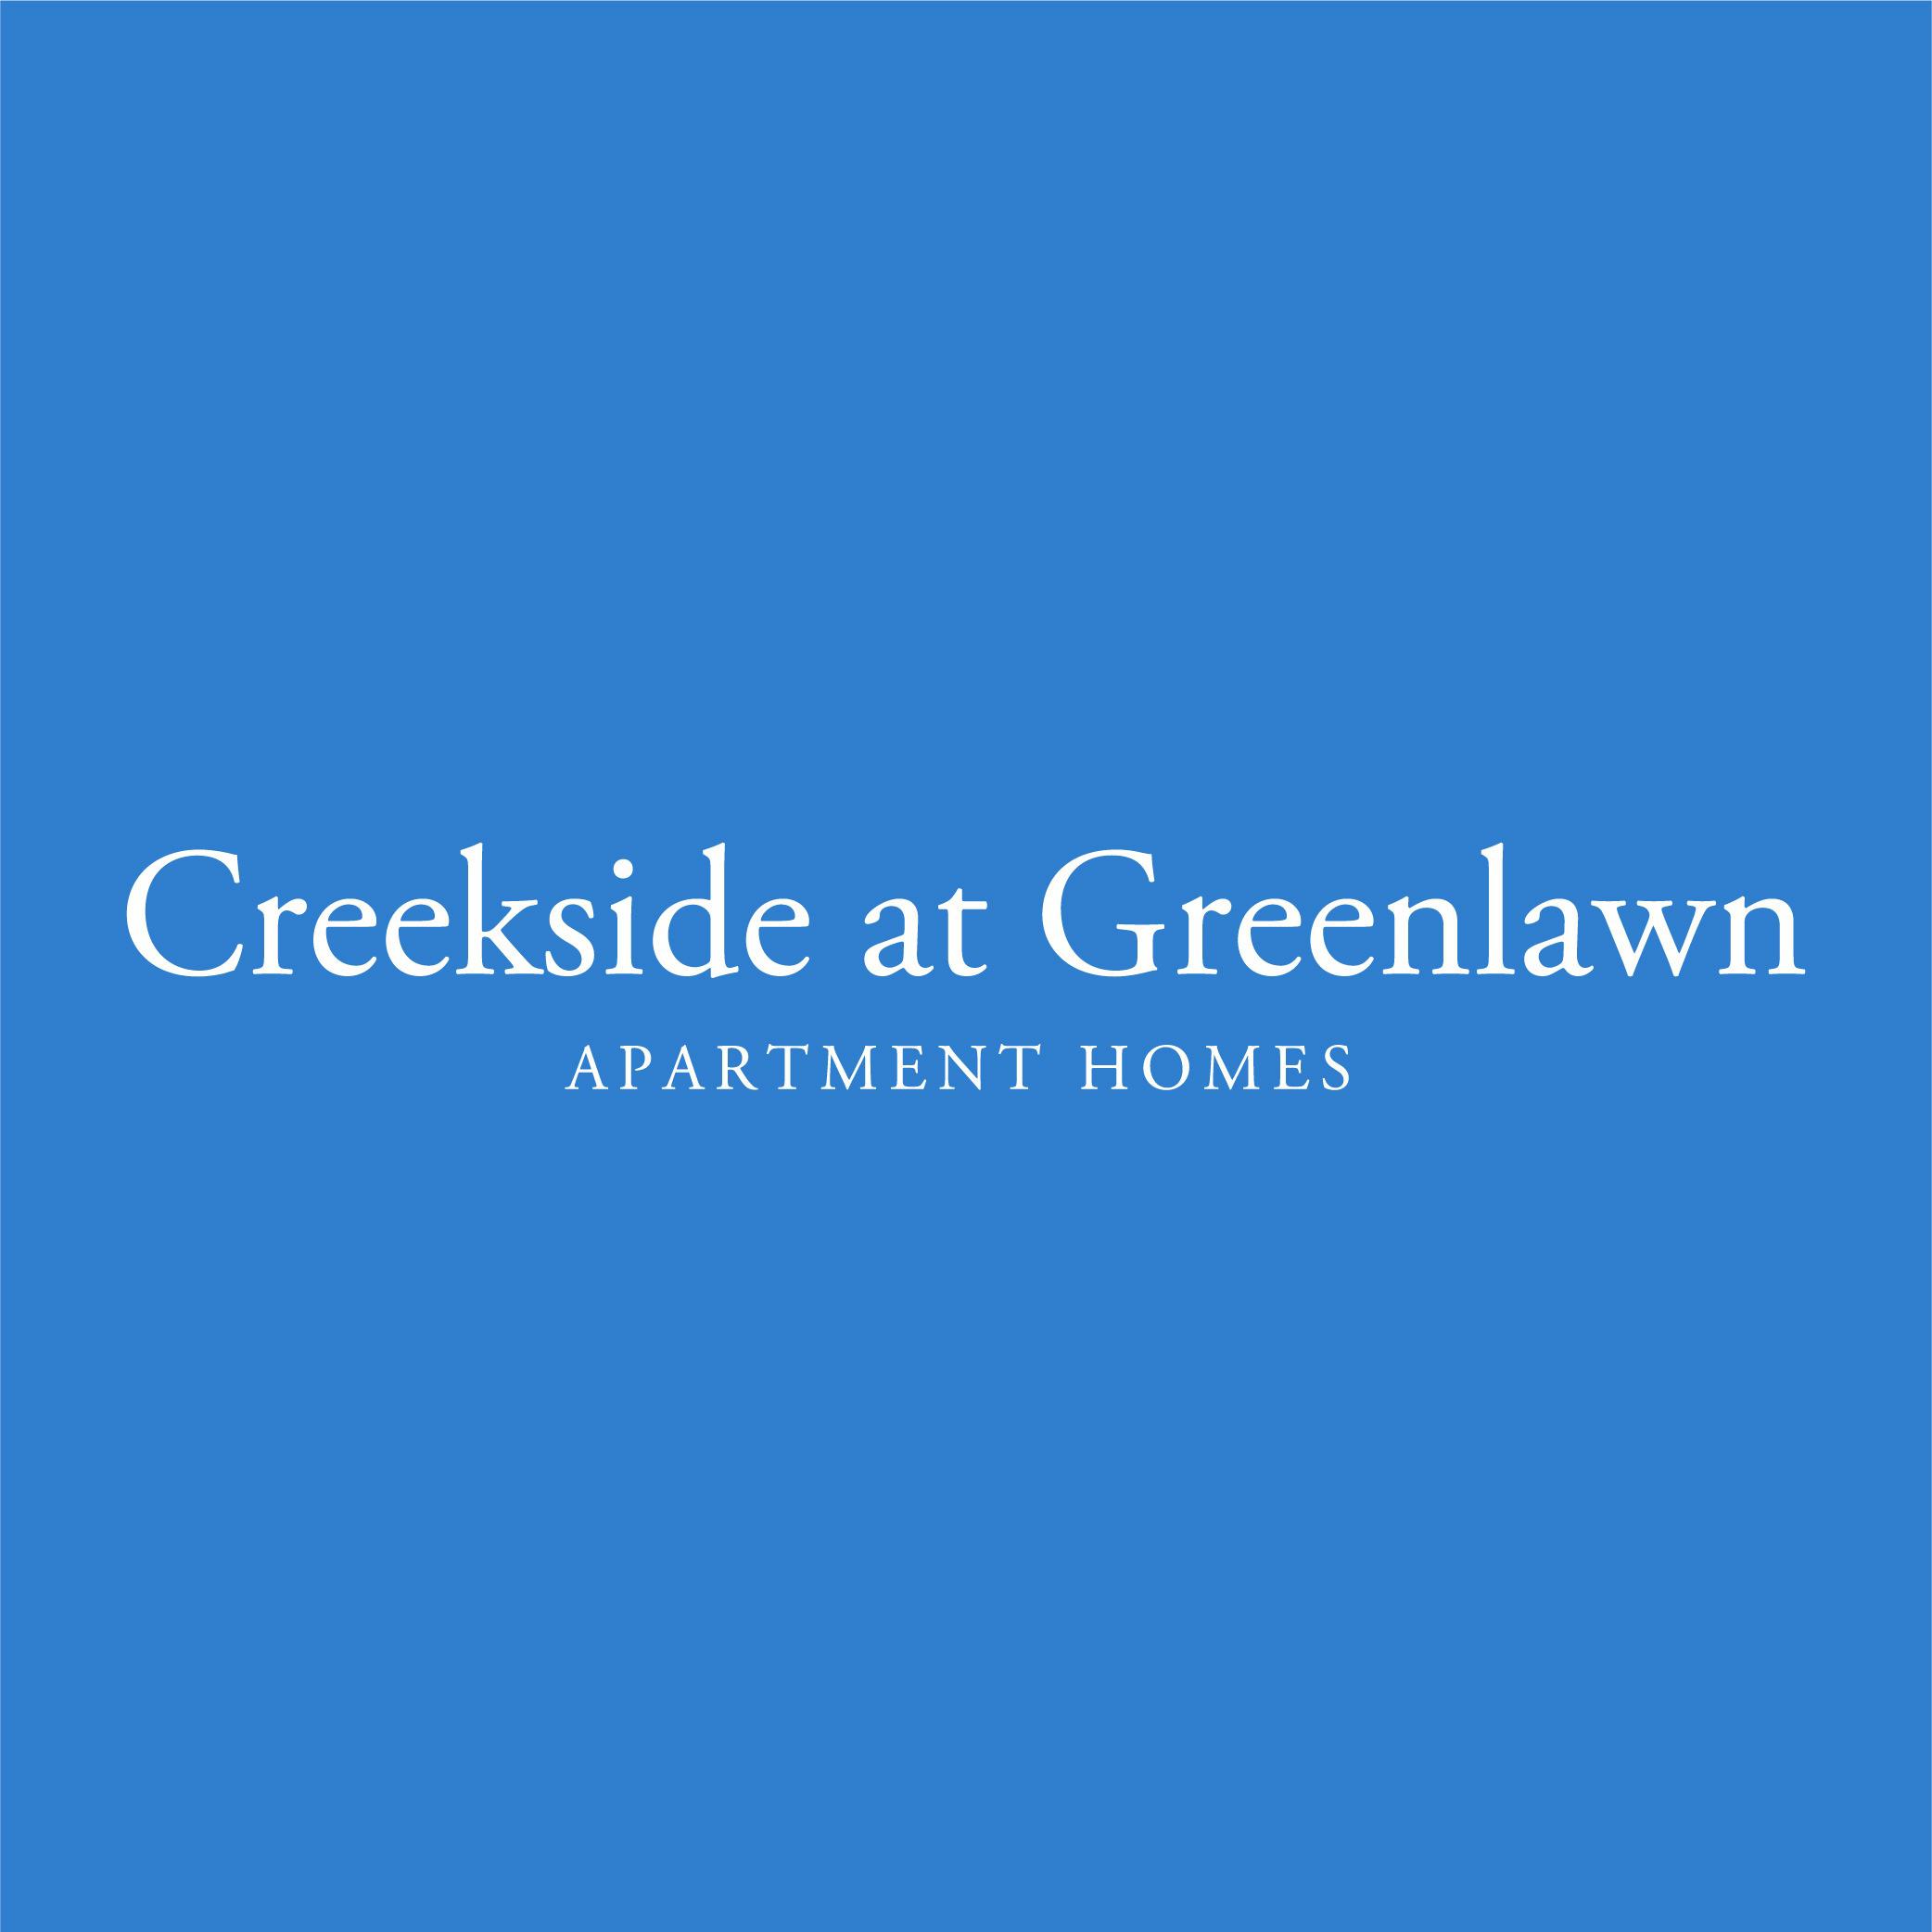 Creekside at Greenlawn Apartment Homes - Columbia, SC 29209 - (803)931-3049 | ShowMeLocal.com